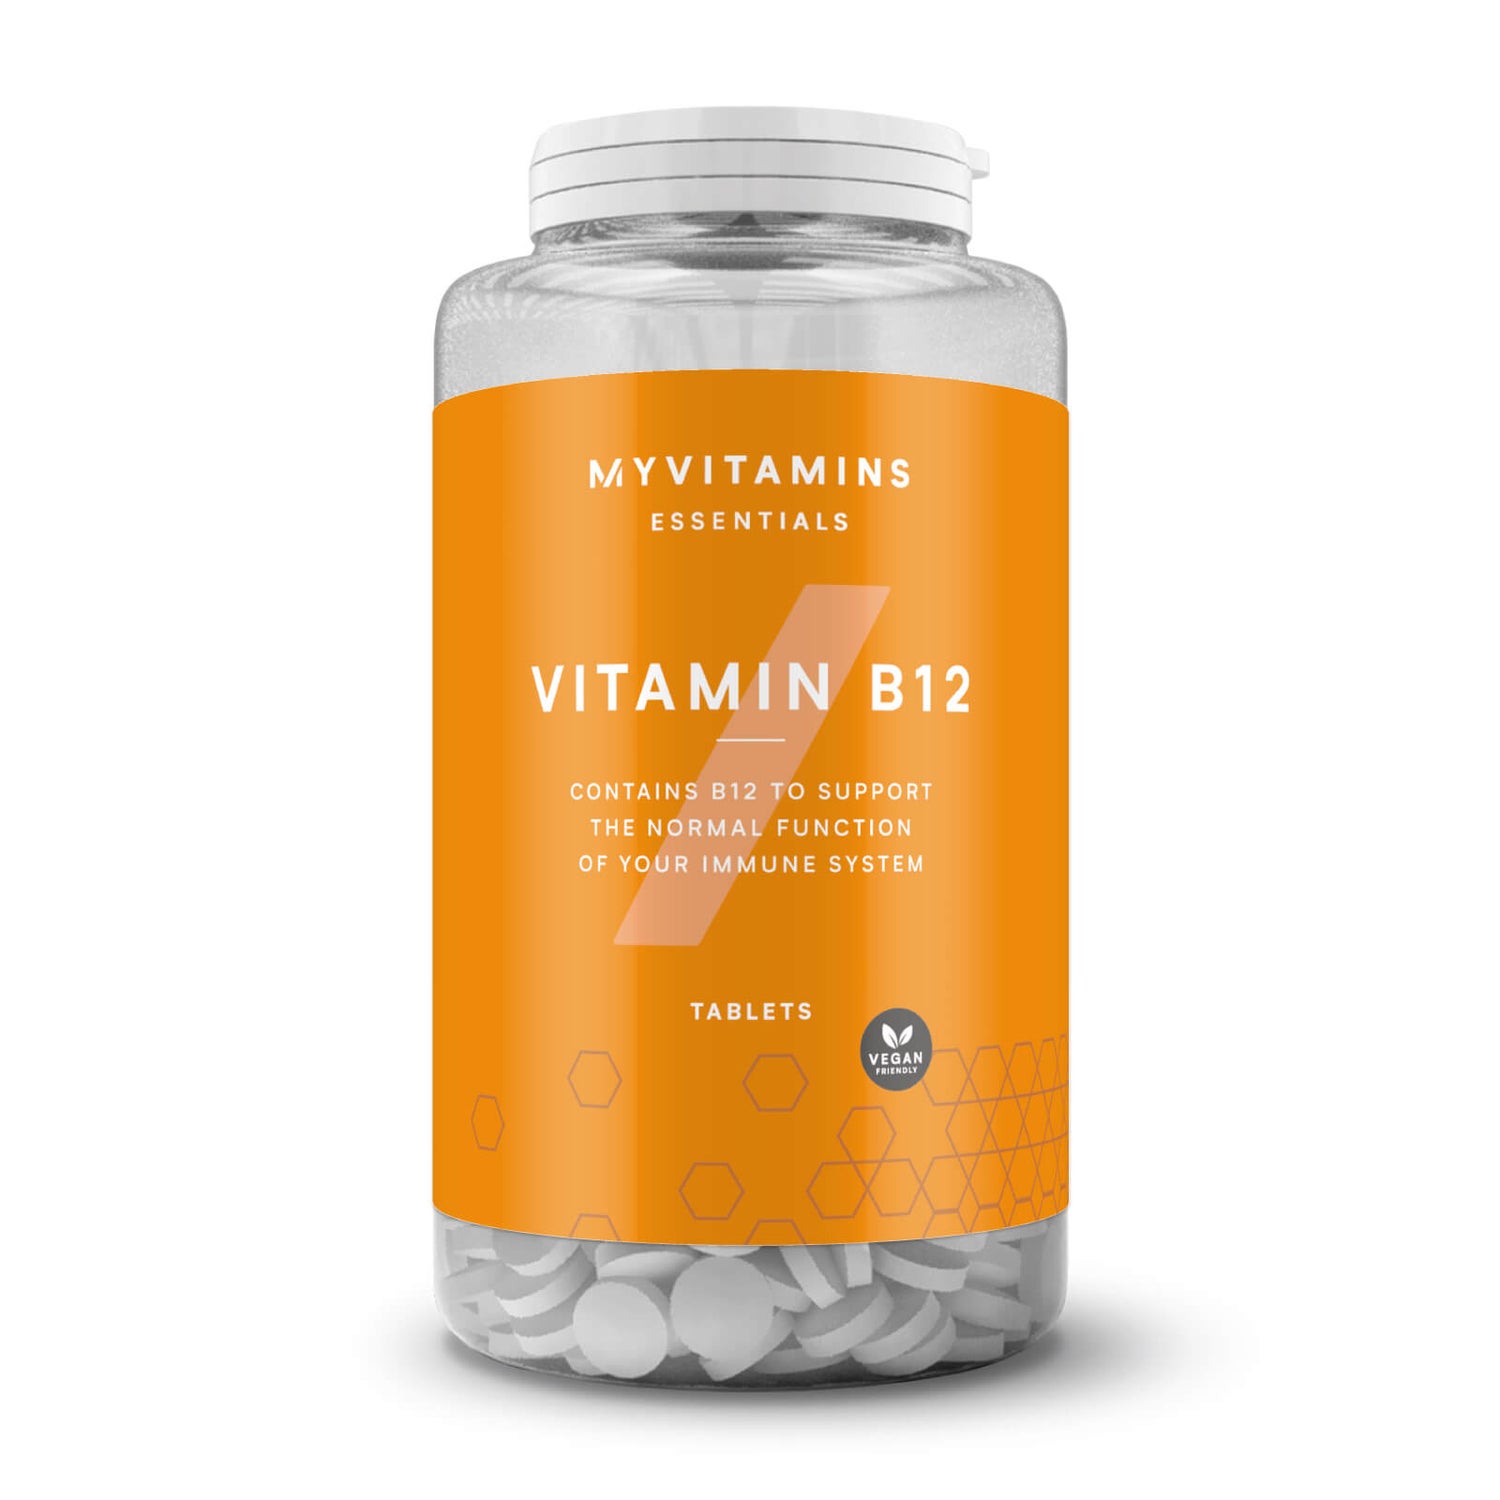 Myvitamins Vitamin B12 Tablets